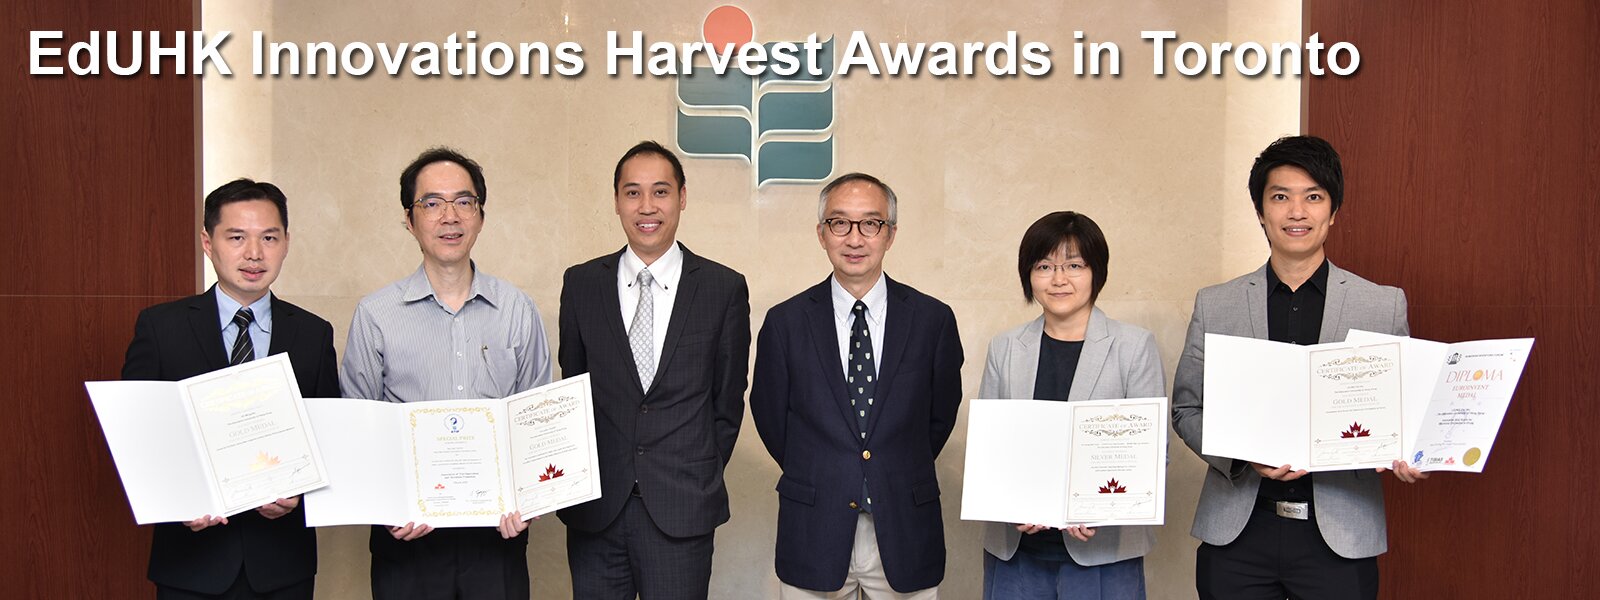 EdUHK Innovations Harvest Awards in Toronto